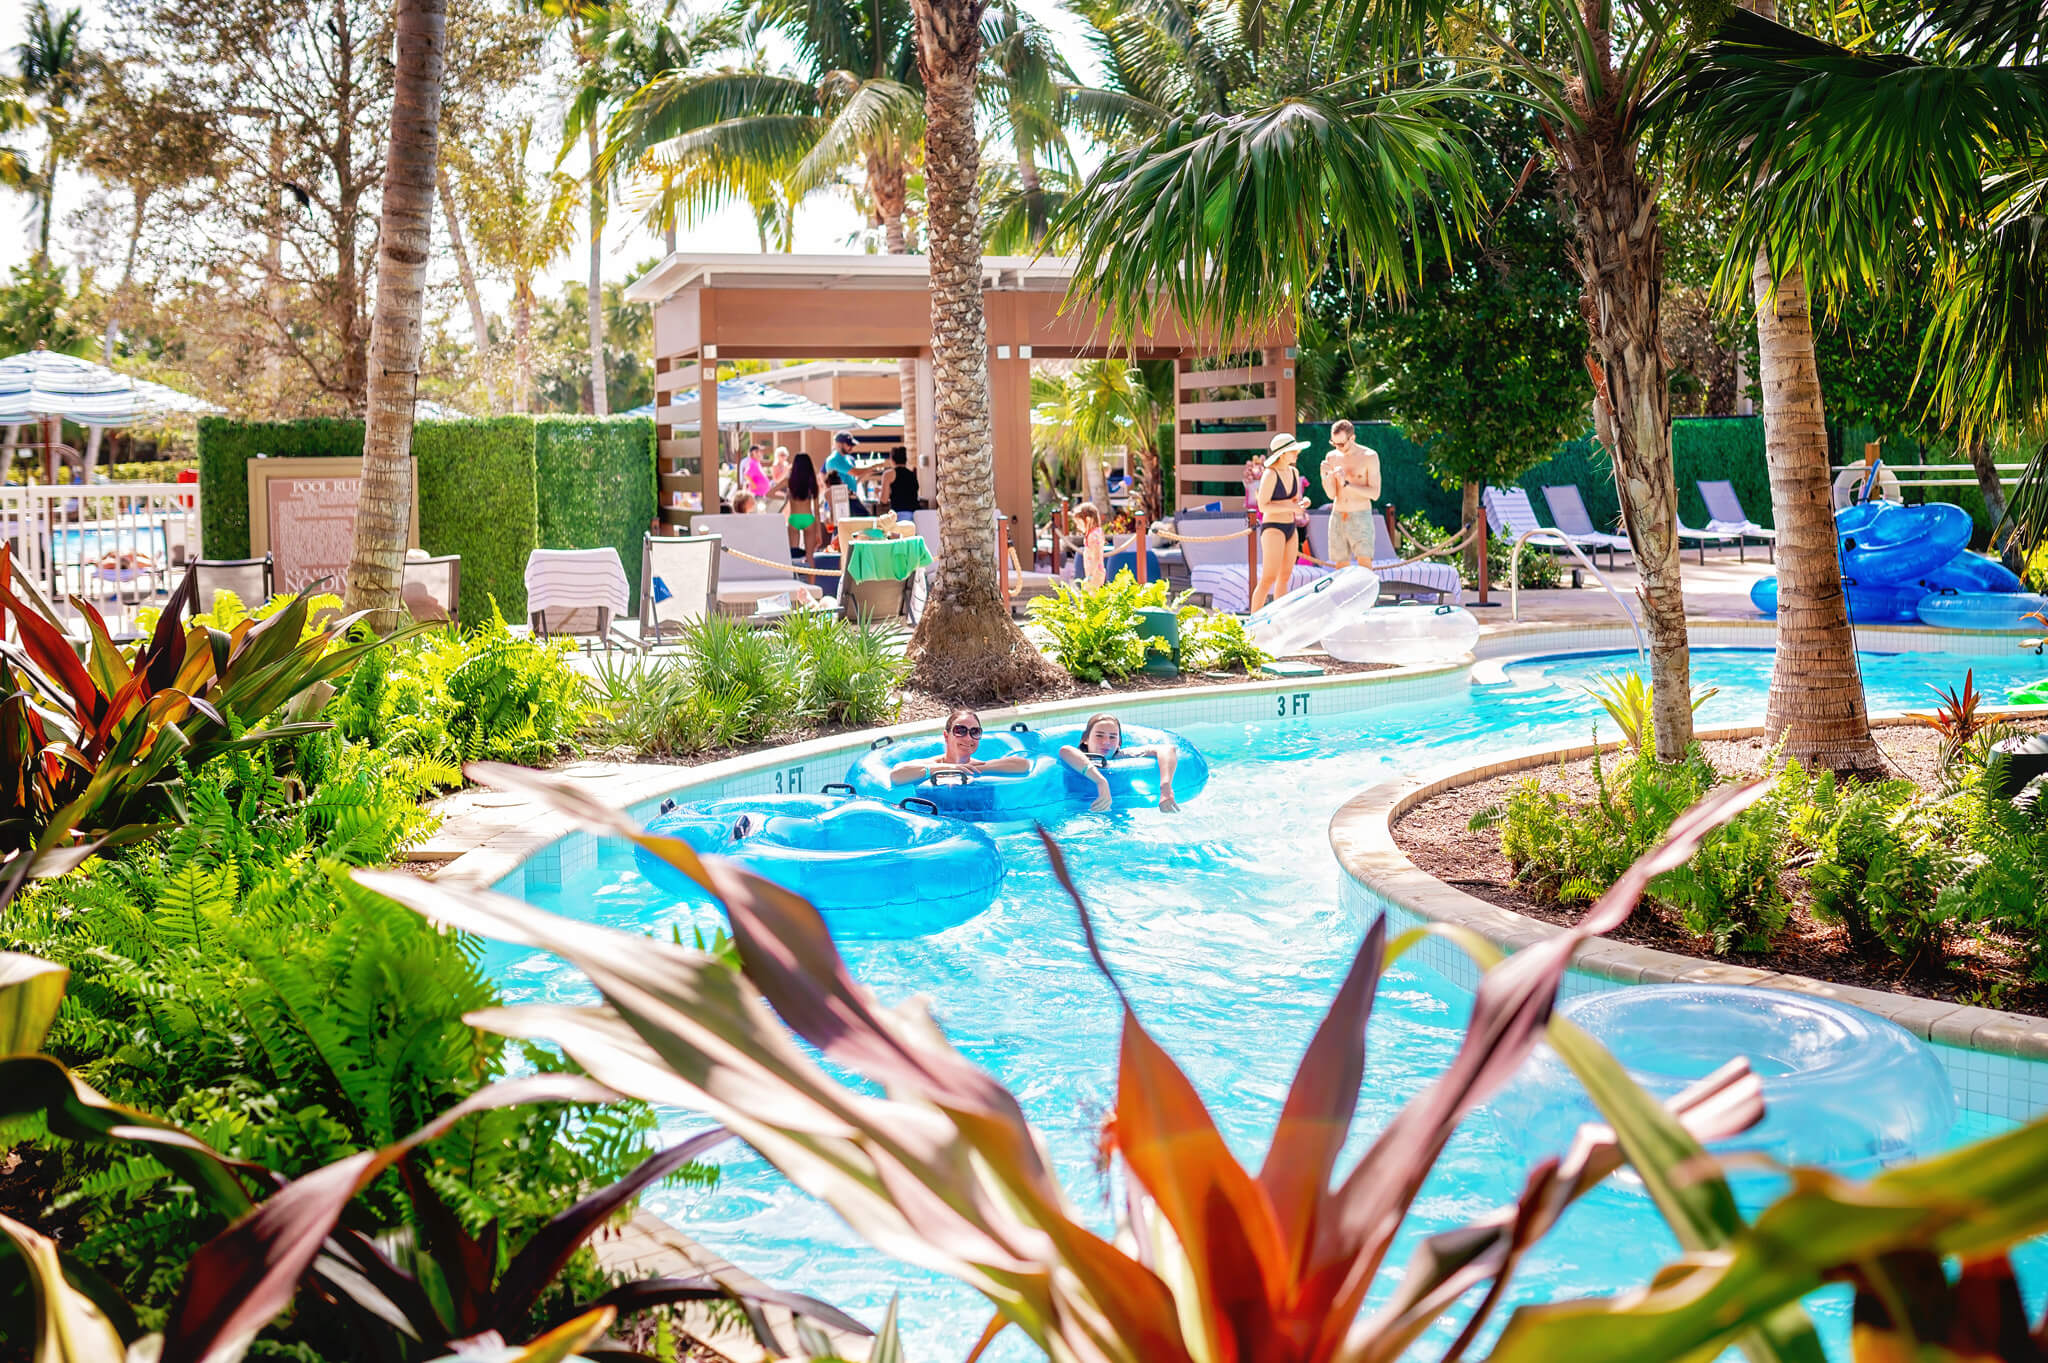 Hyatt Regency Coconut Point: a Family Friendly Resort in Florida